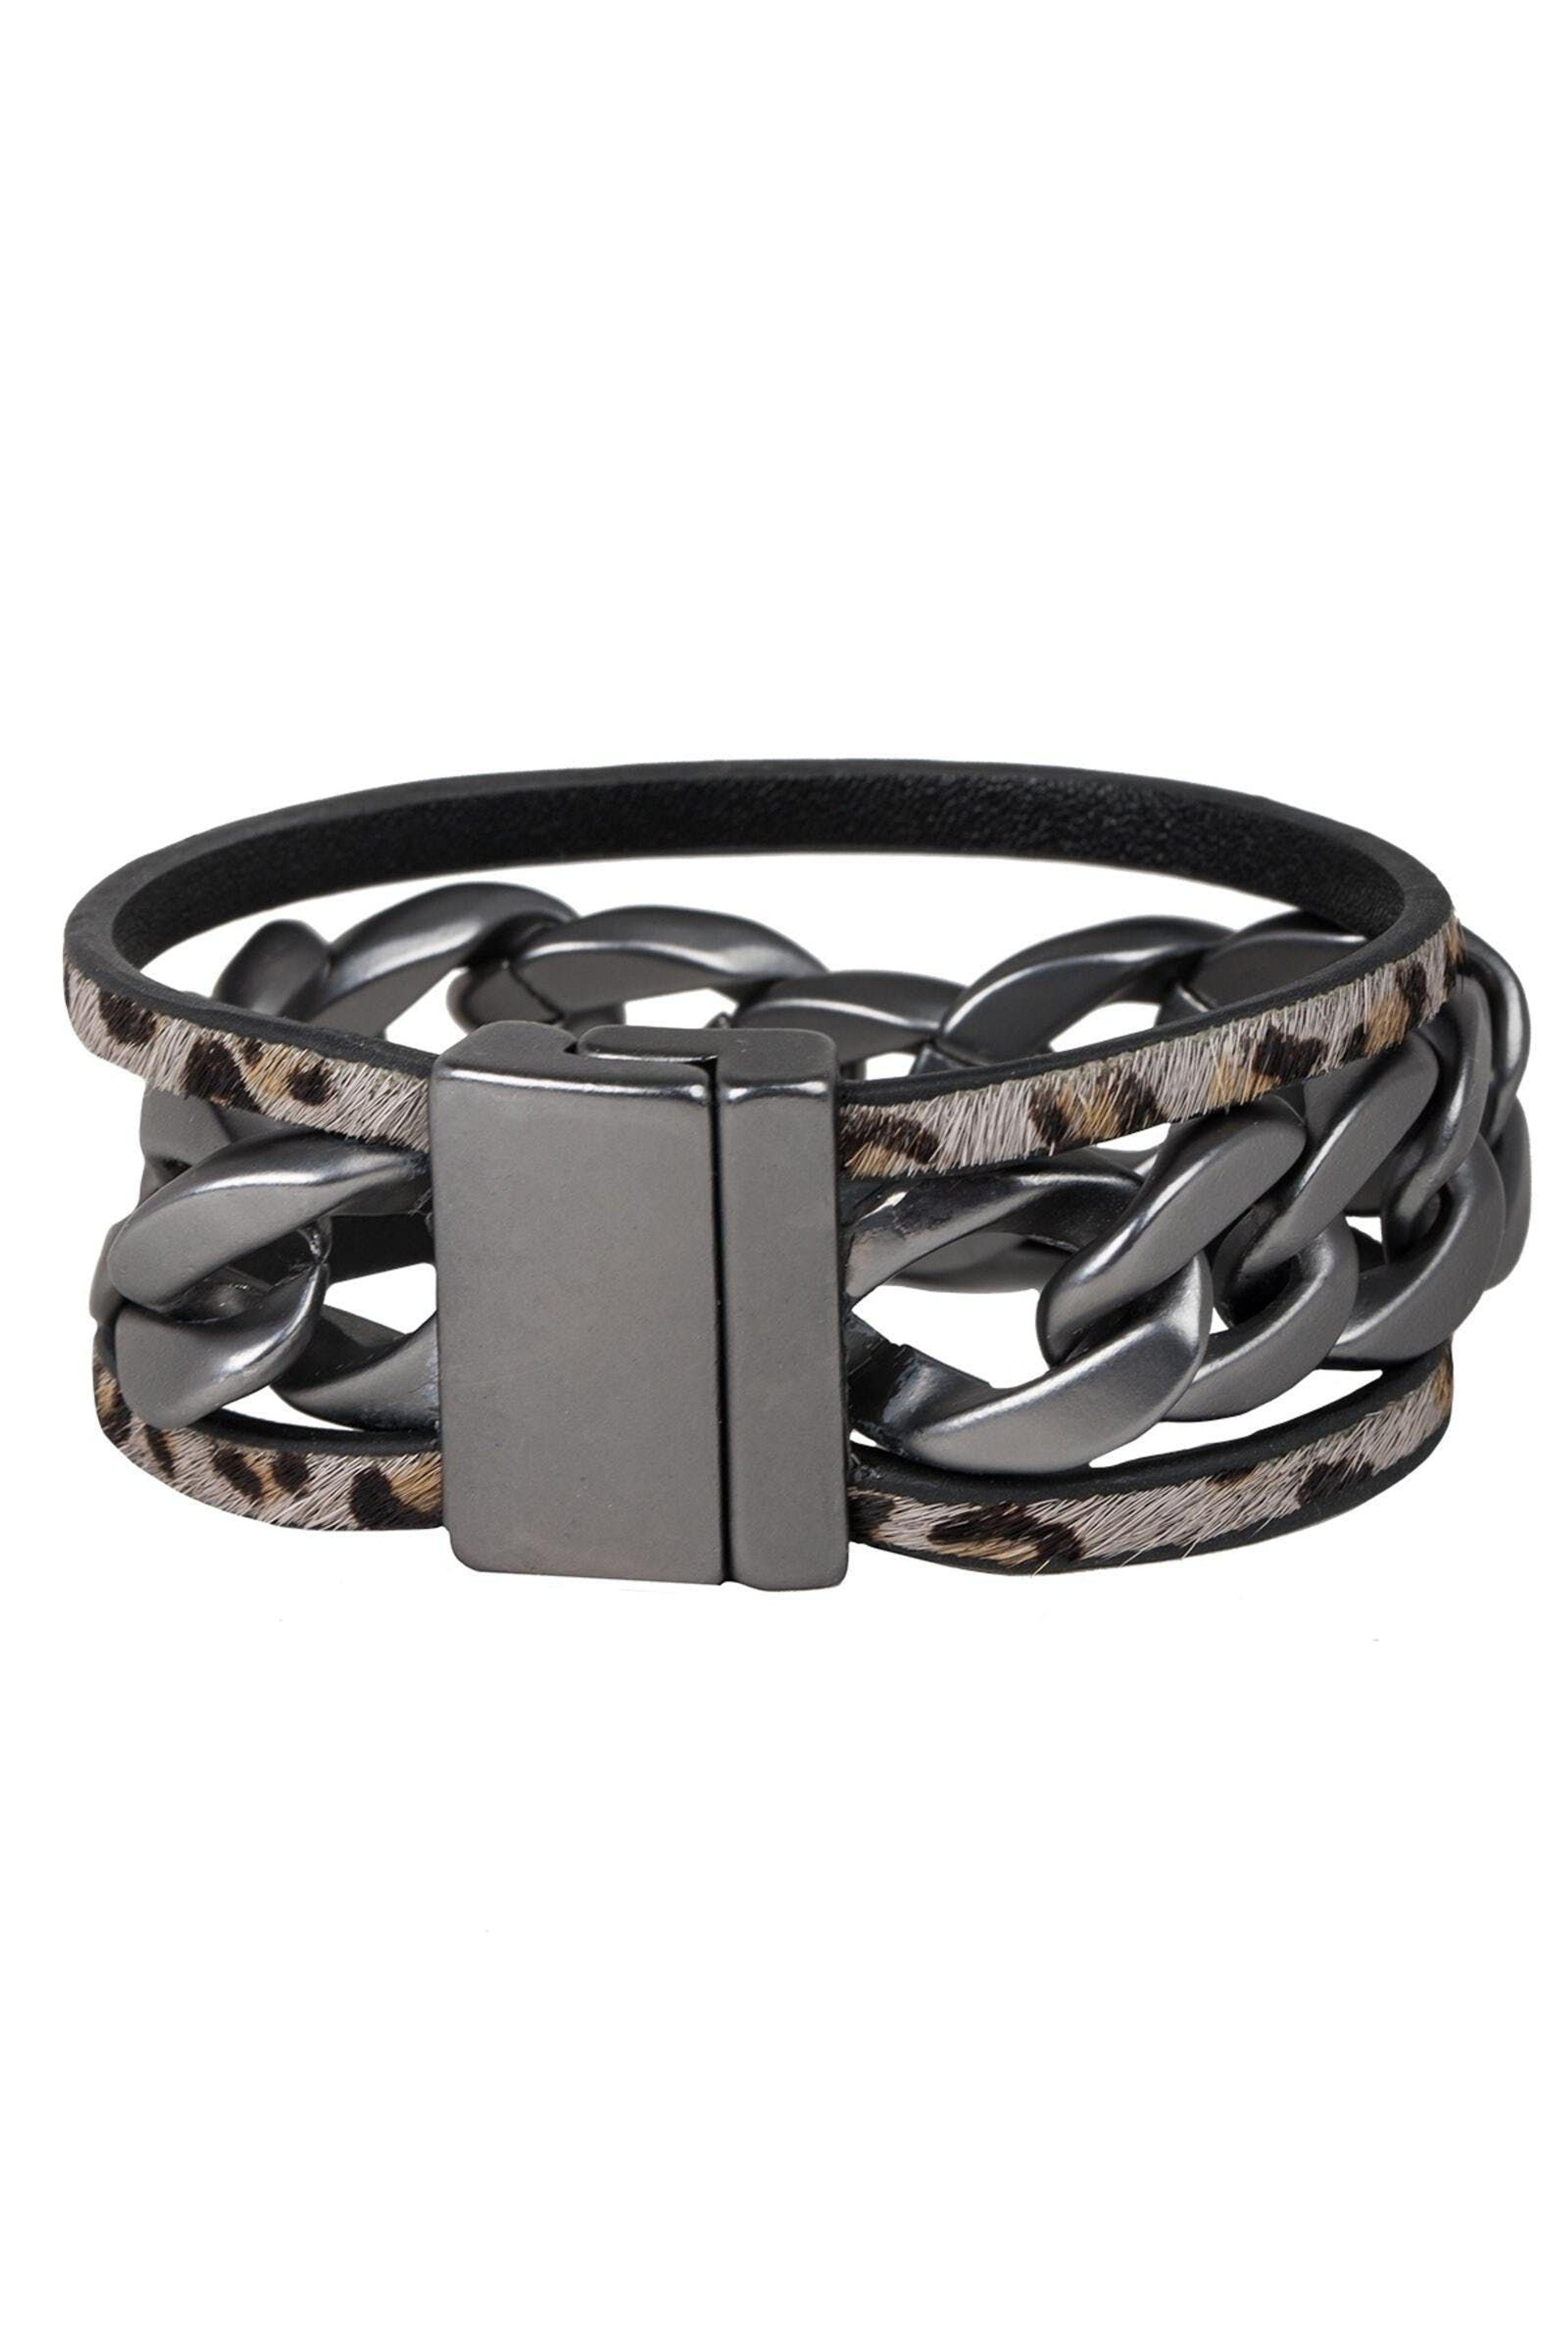 Women's Designer Silver & Leather Bracelets